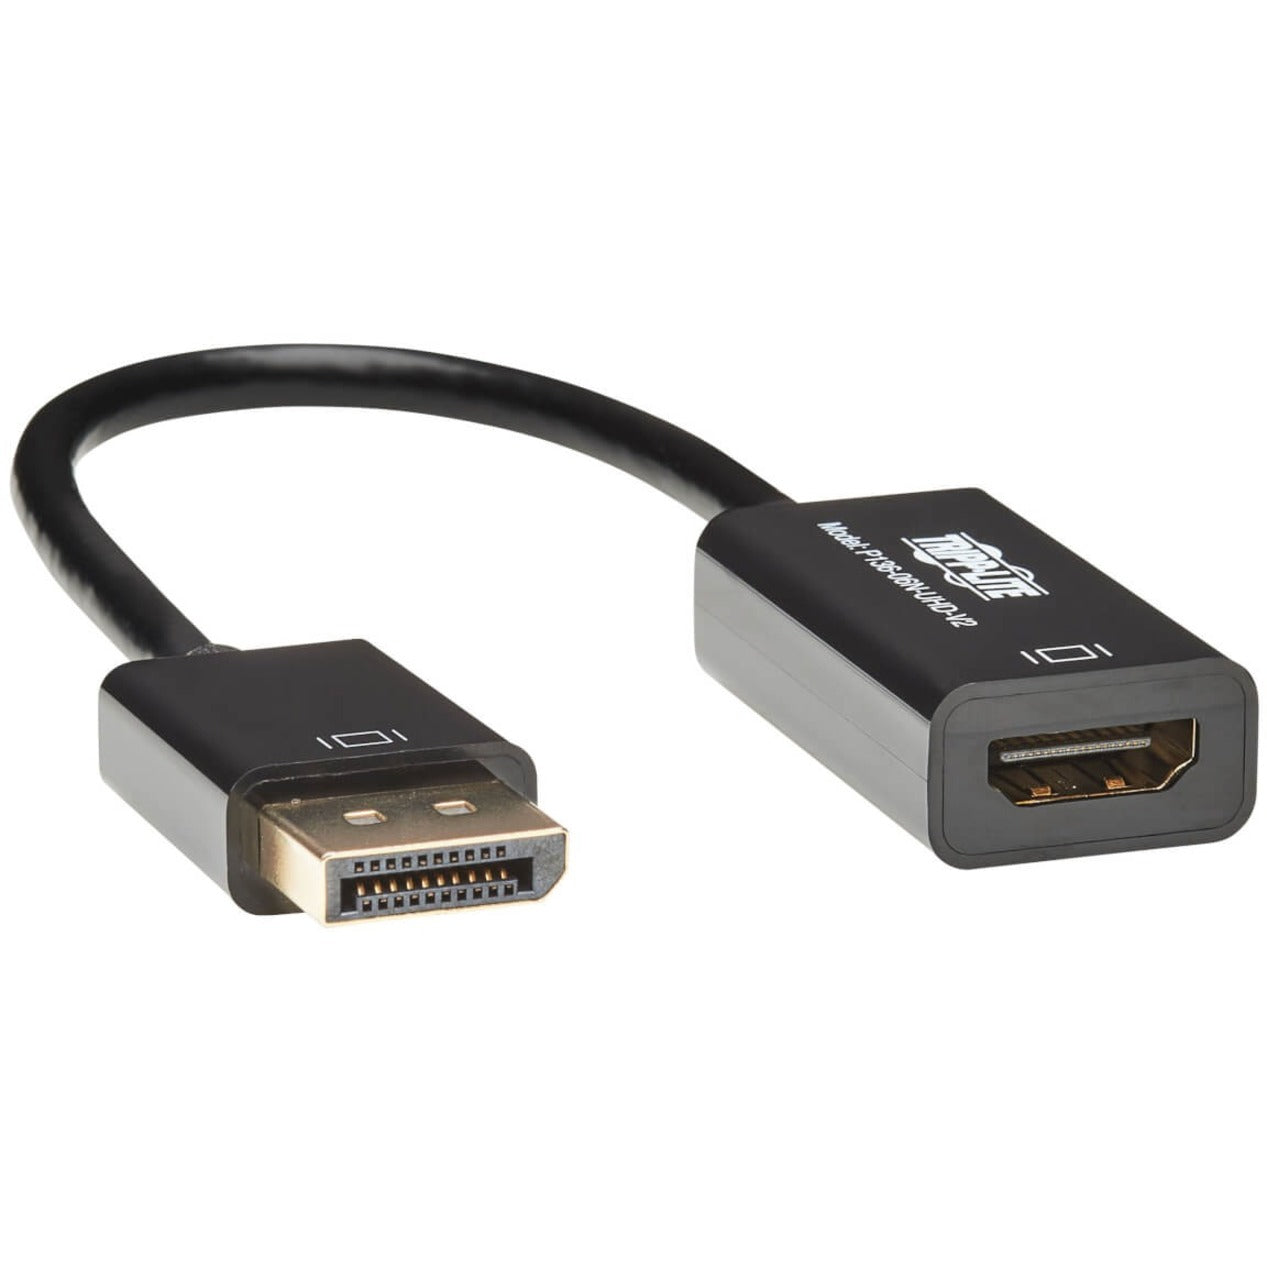 Tripp Lite P136-06N-UHD-V2 DisplayPort/HDMI Audio/Video Kabel Aktiv 6" 3840 x 2160 vergoldet